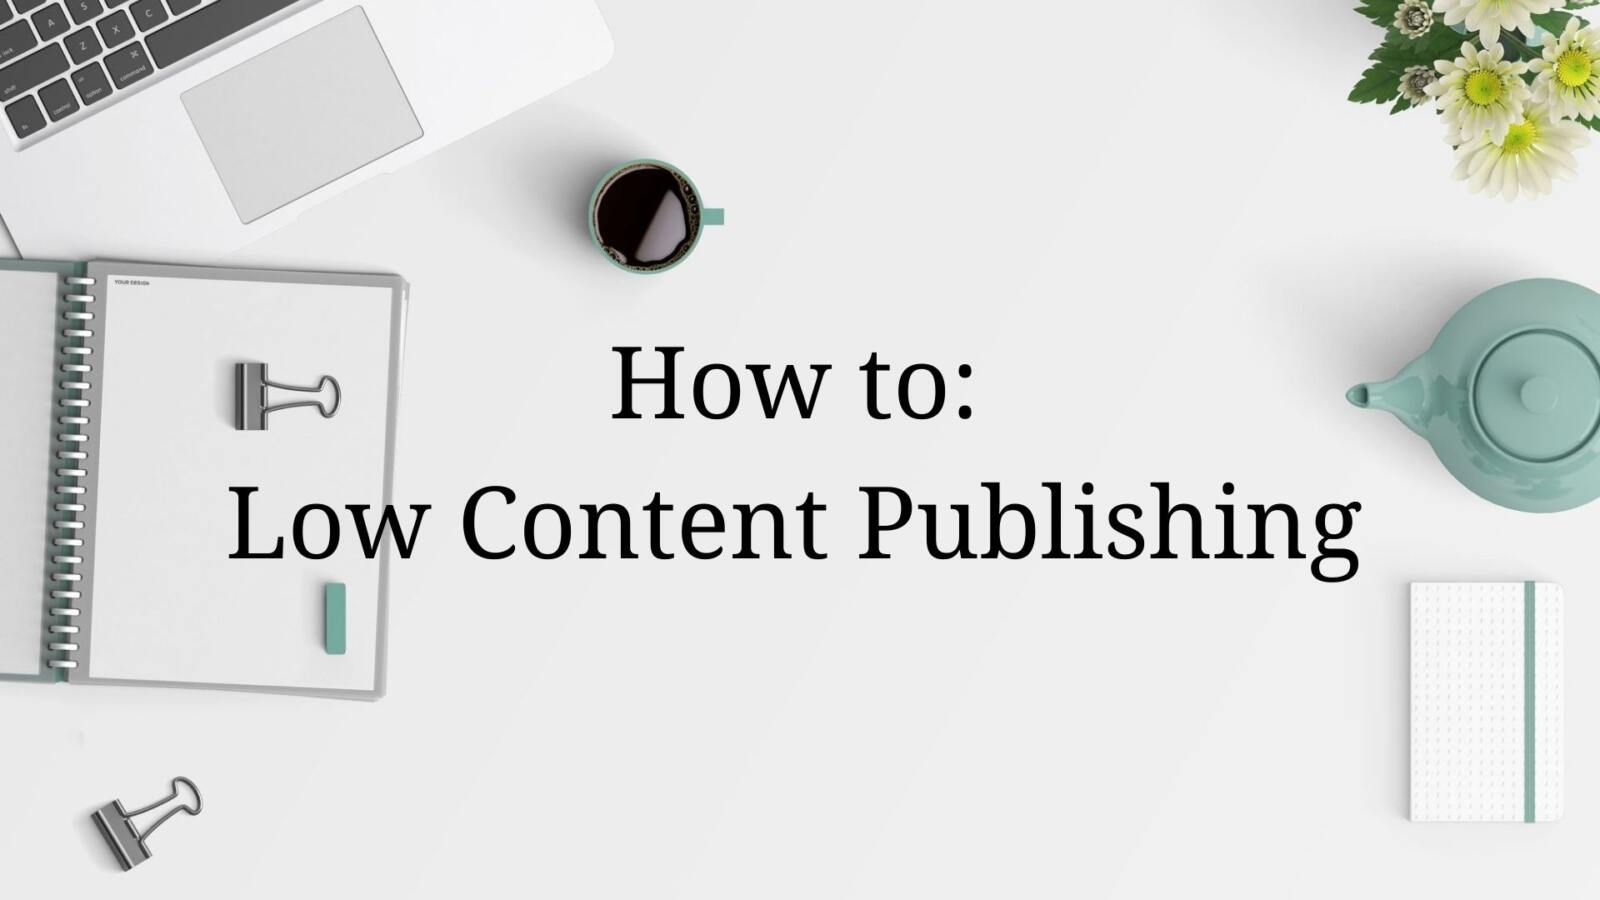 Low content publishing